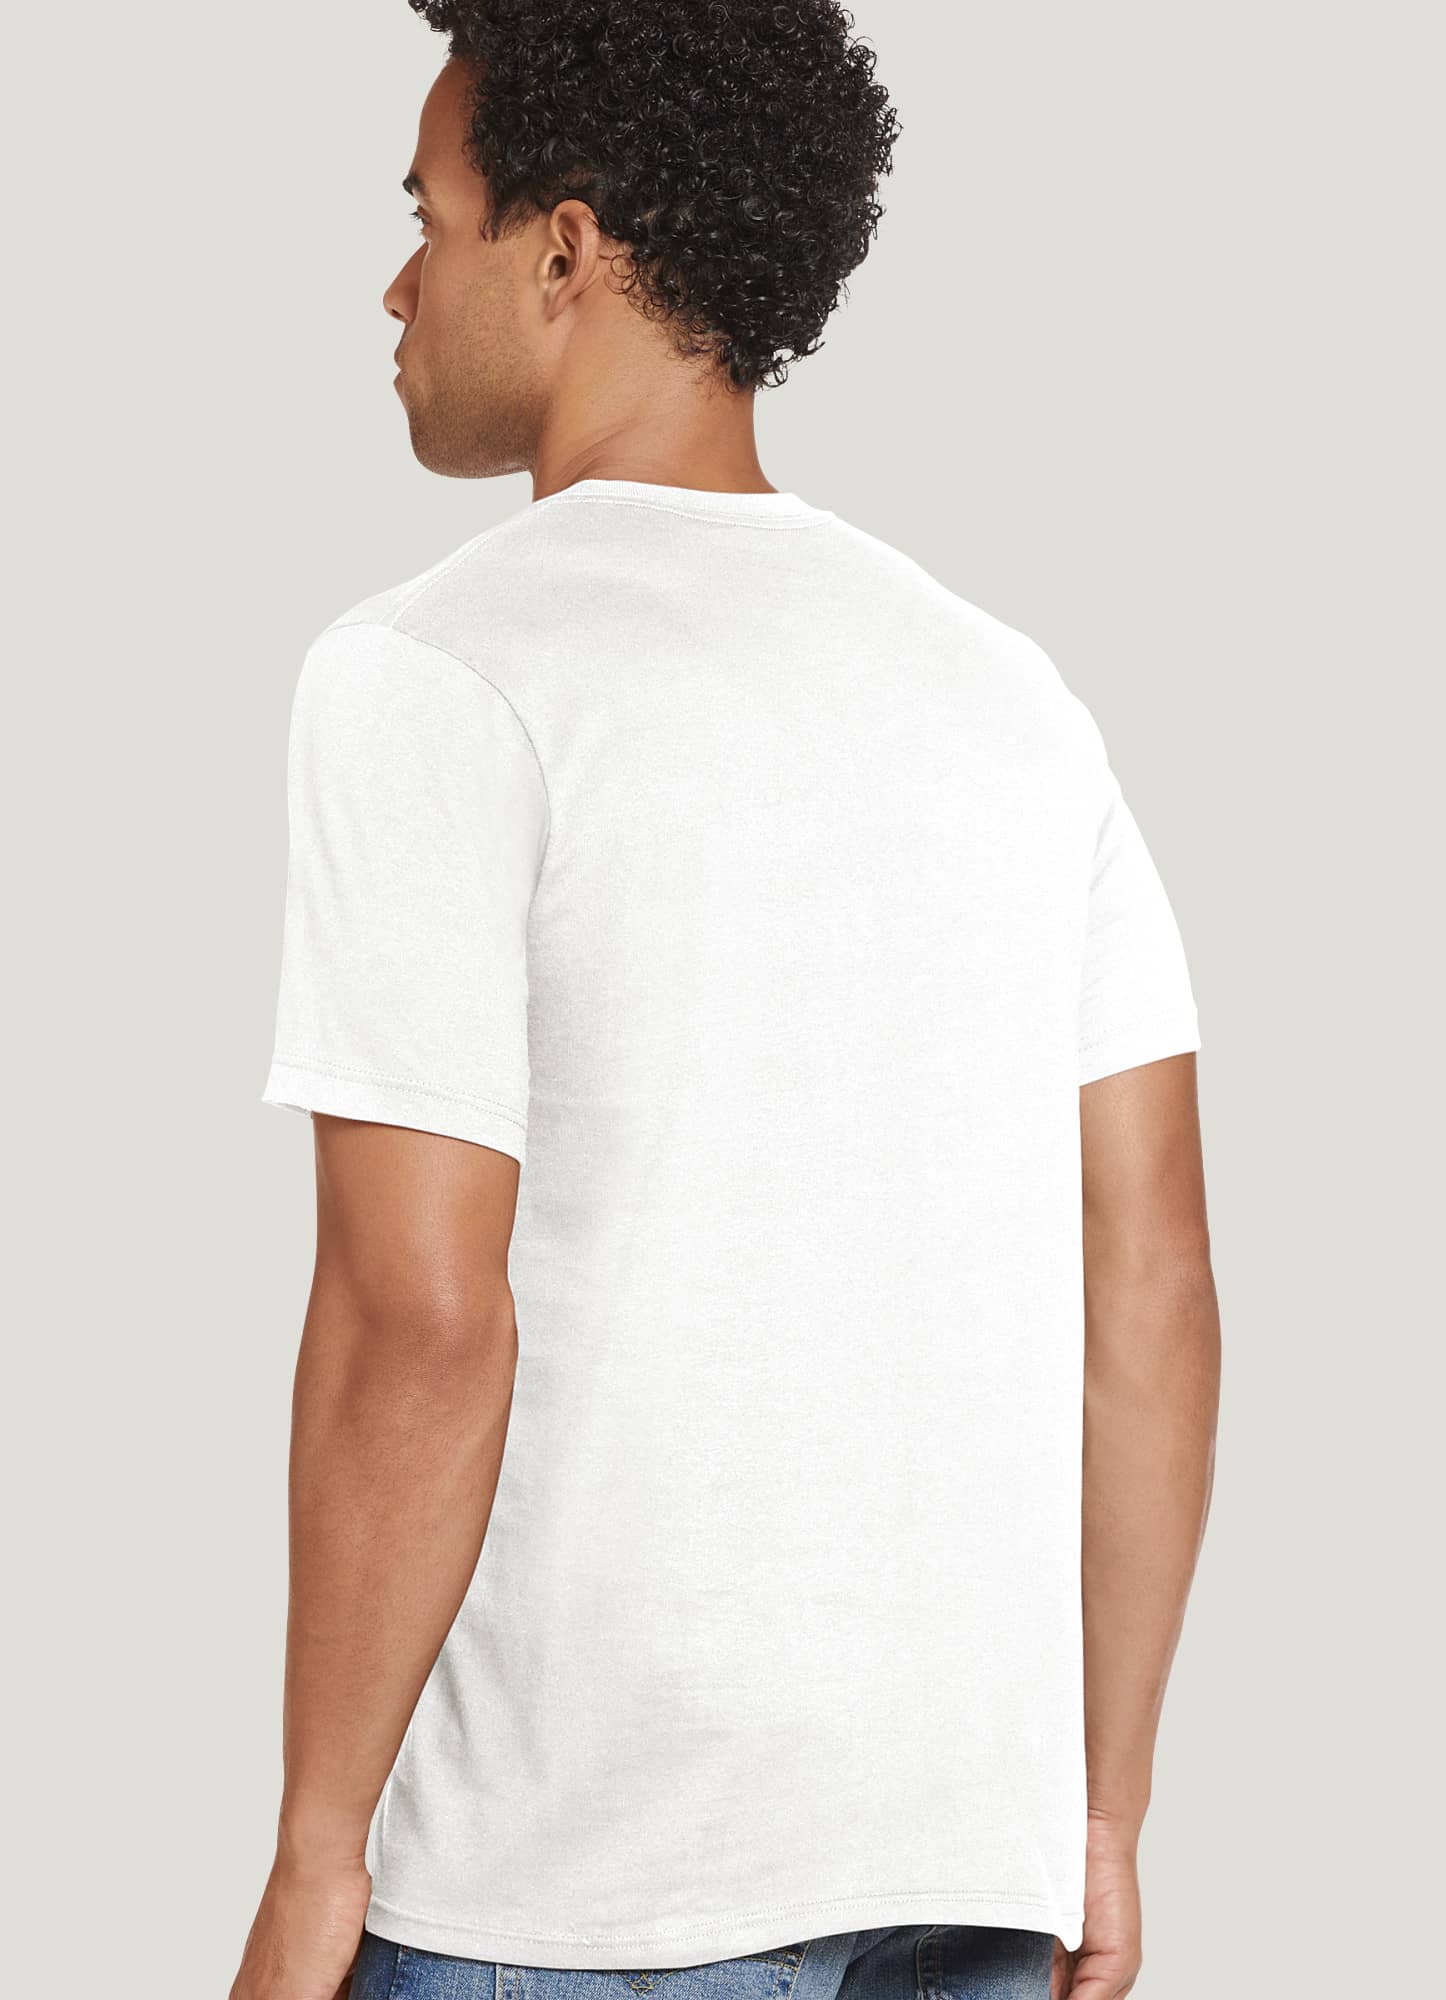 Jockey® Tall Man Made in America 100% Cotton Crew Neck T-Shirt - 2